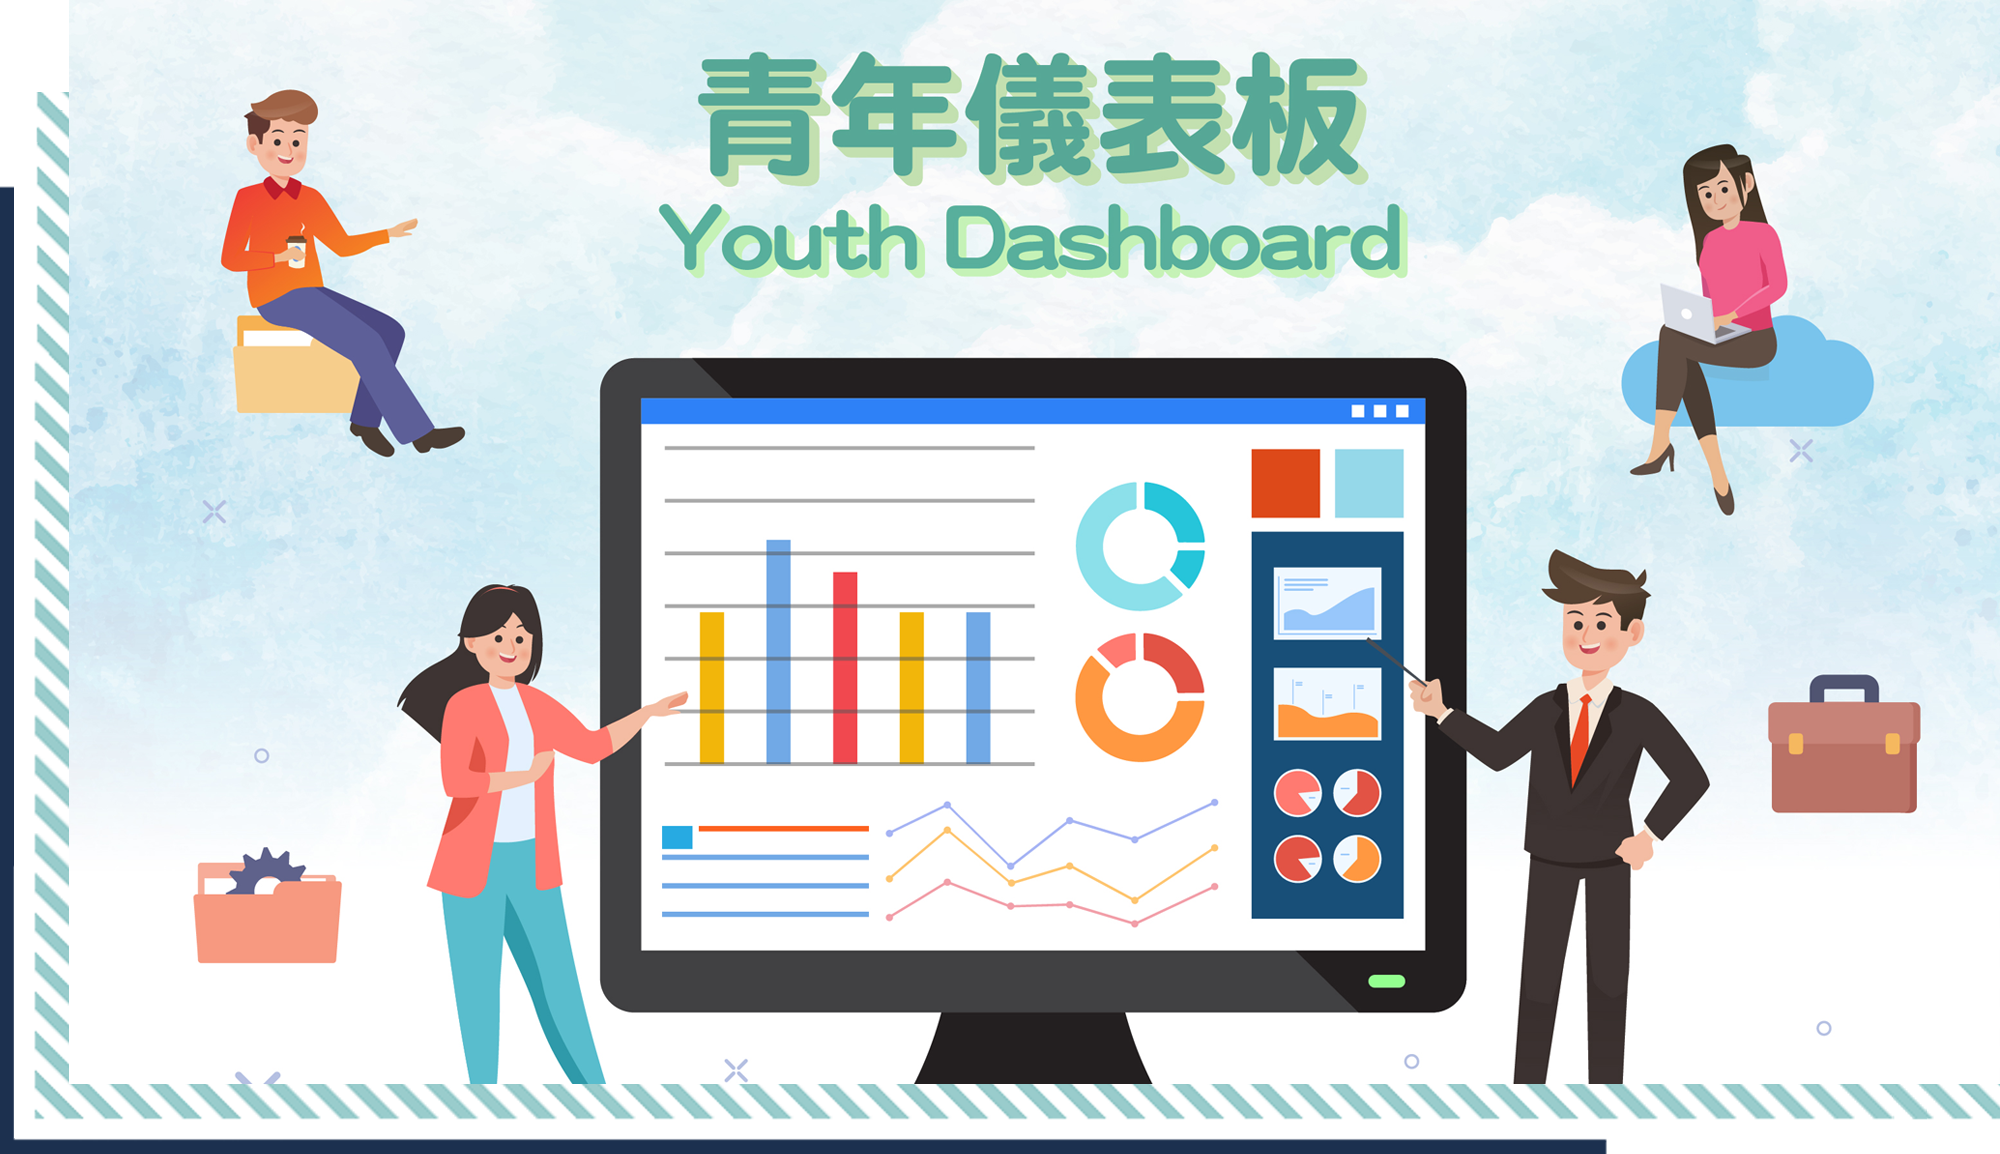 Youth Dashboard